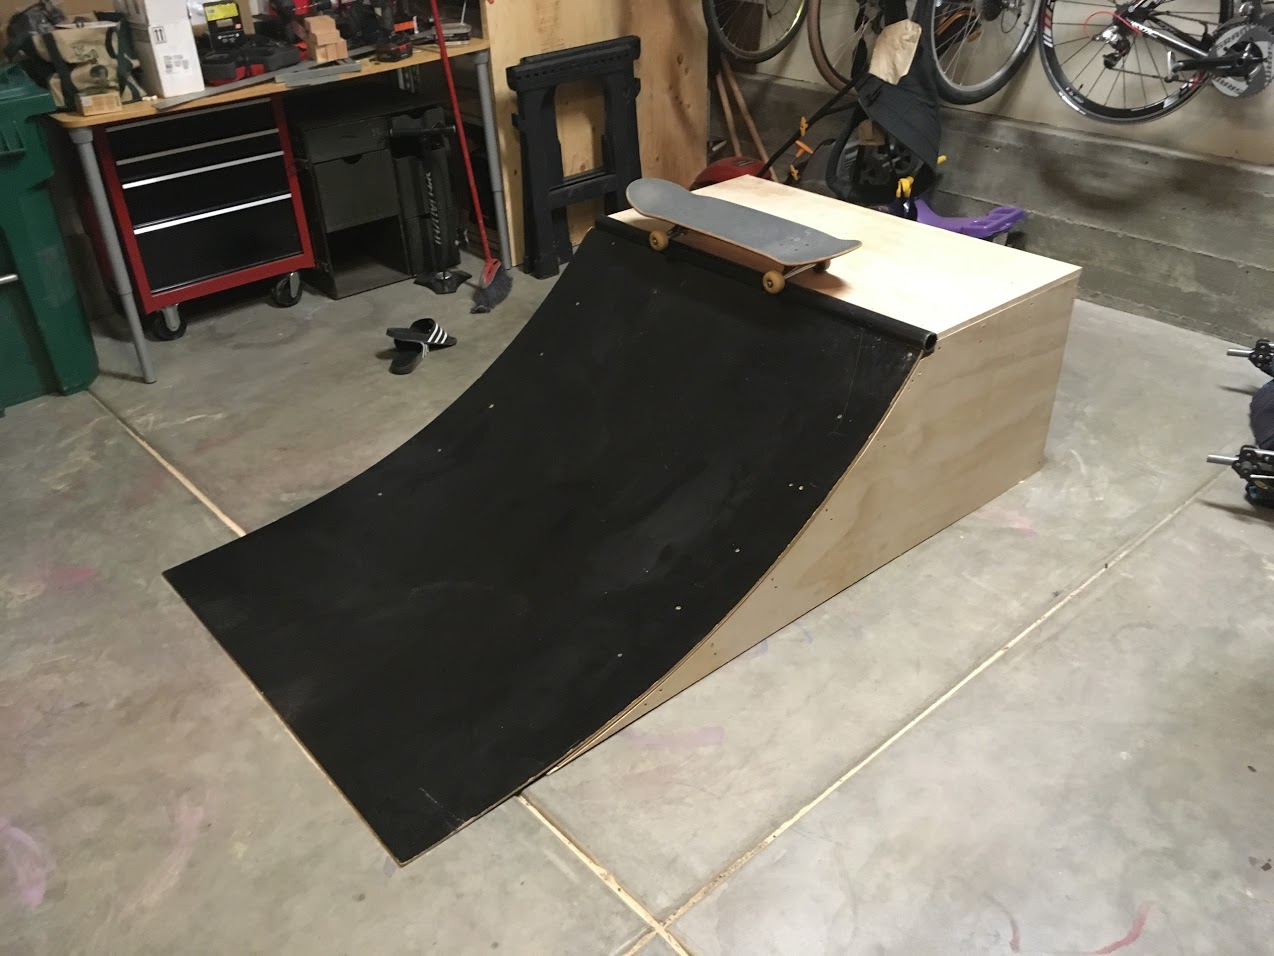 2 foot mini ramp plans